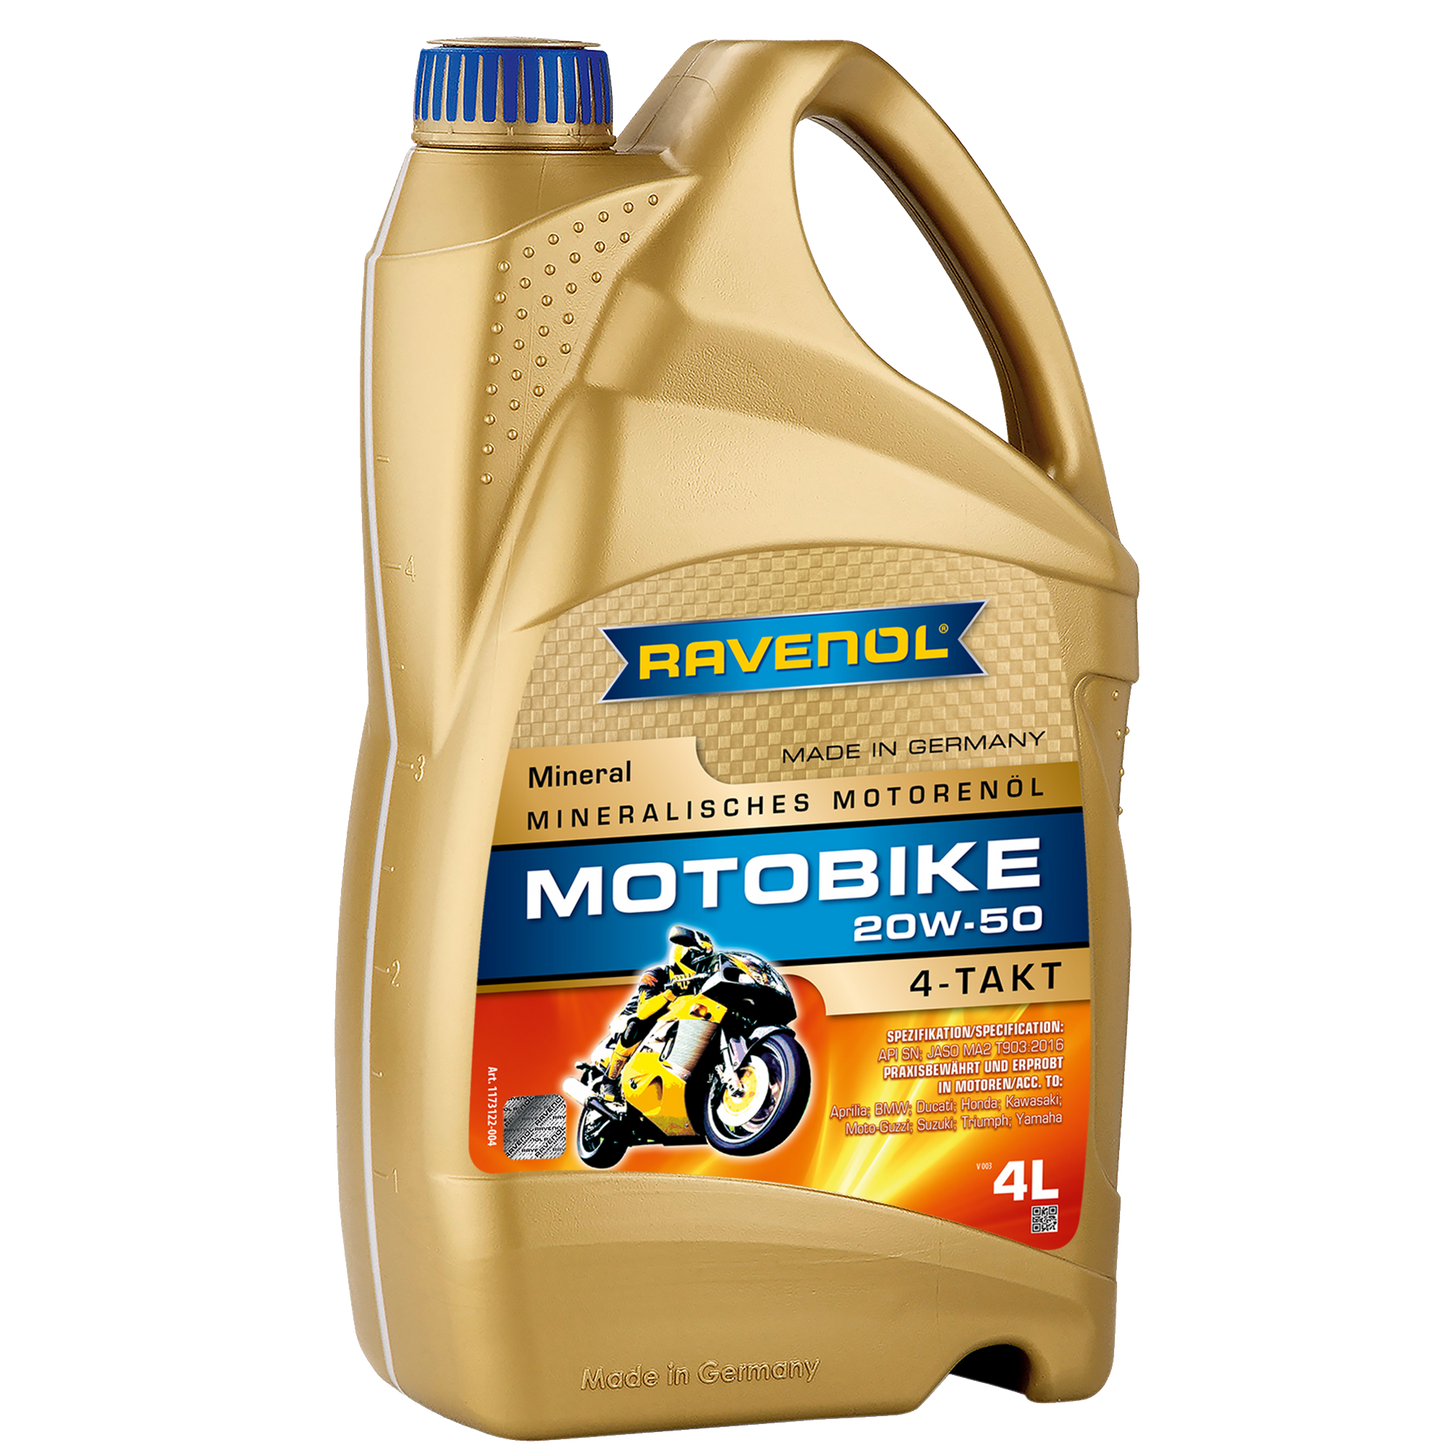 RAVENOL Motobike 4-T Mineral SAE 20W-50